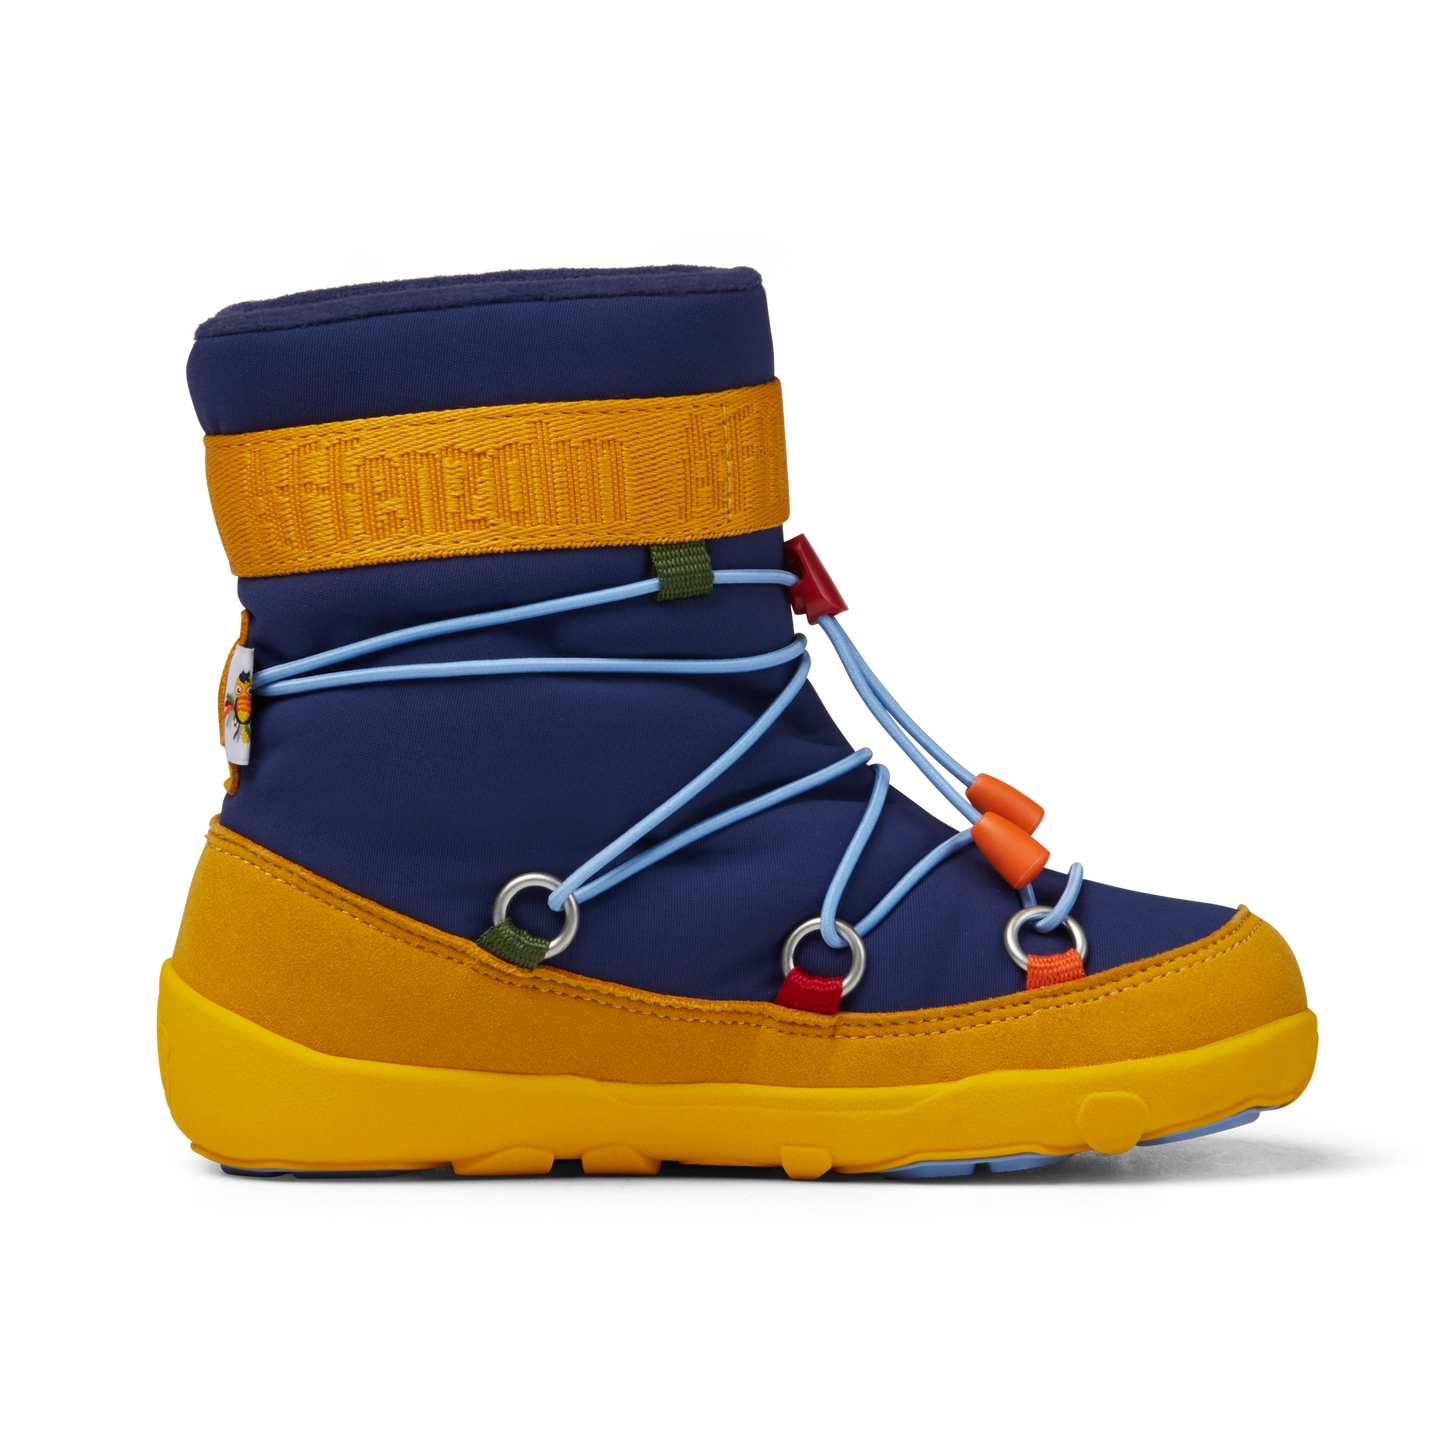 Affenzahn Snow Boot Vegan Snowy barfods vinterstøvler til børn i farven toucan, inderside